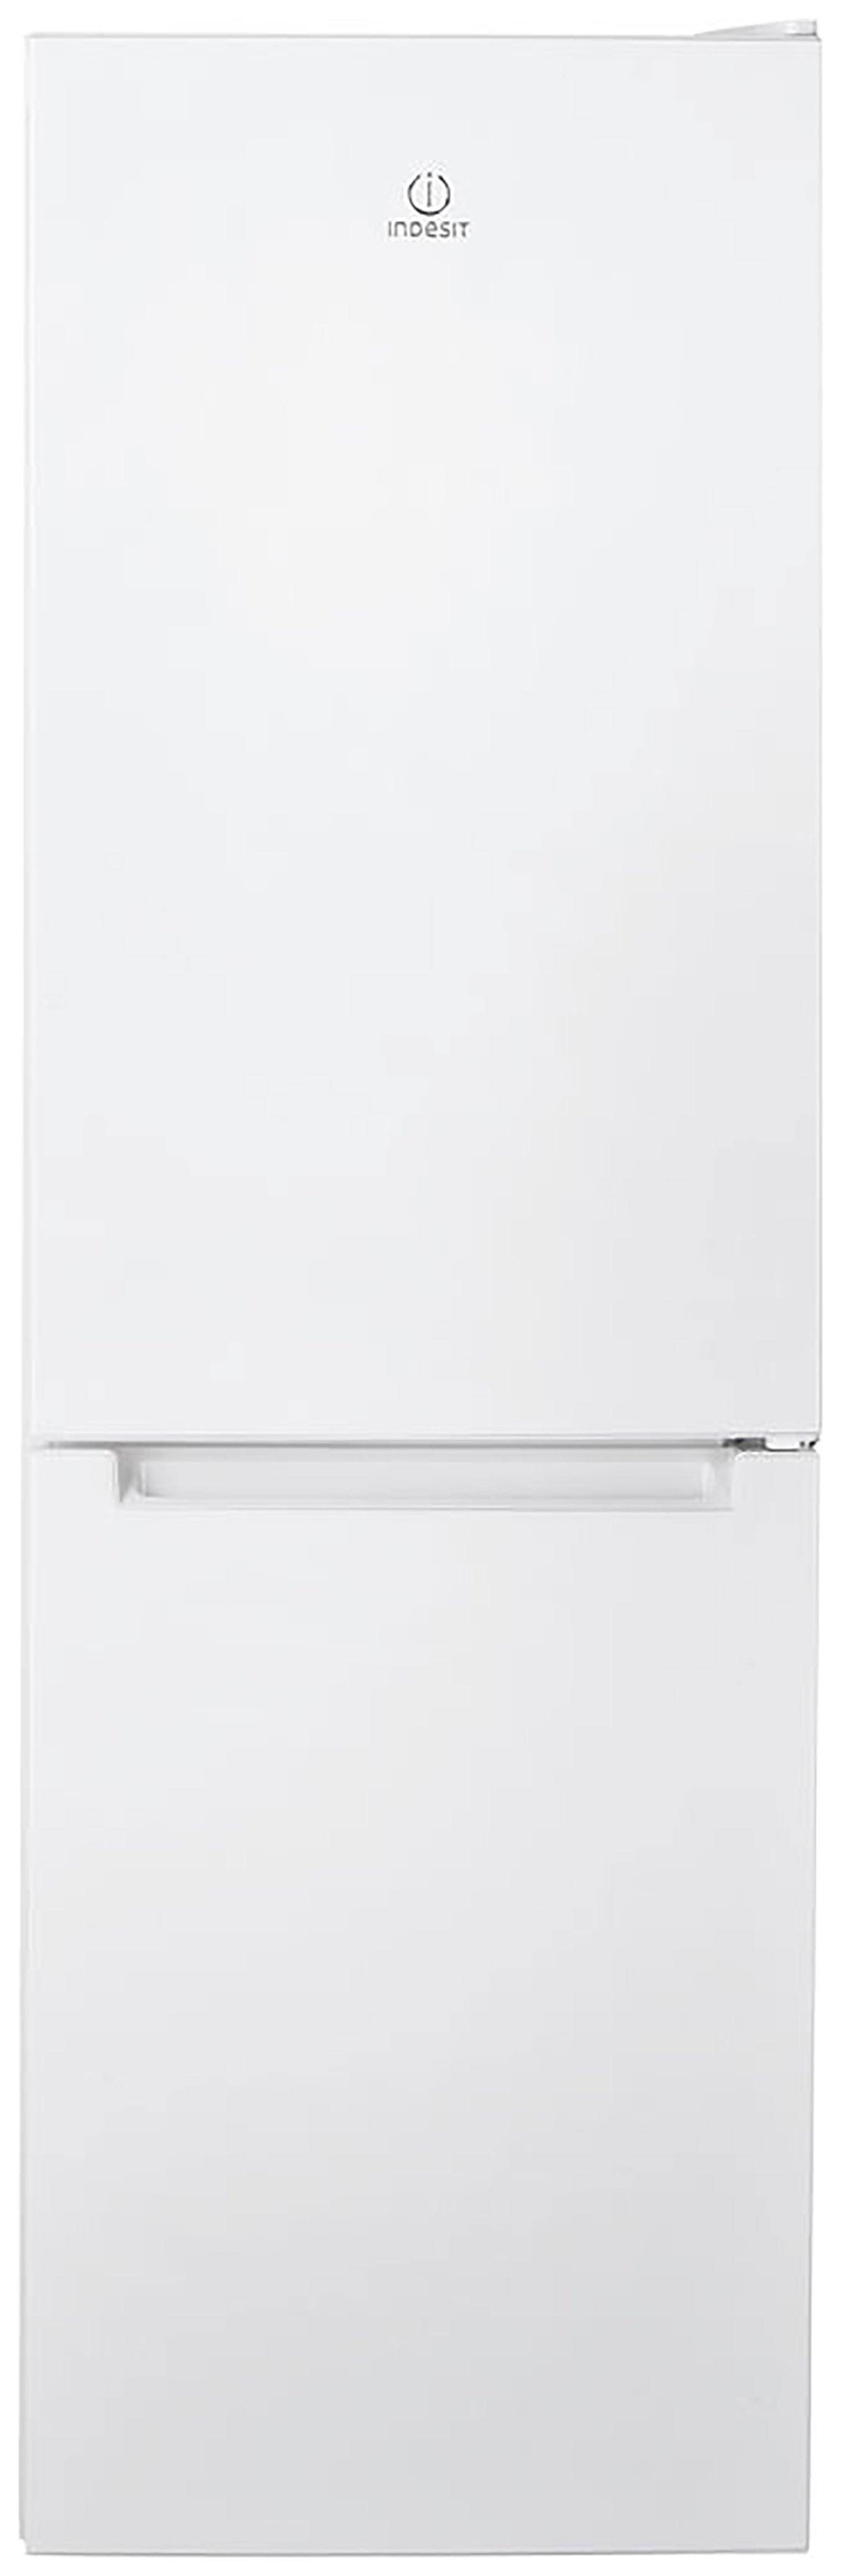 Indesit LR8S1W Fridge Freezer - White.